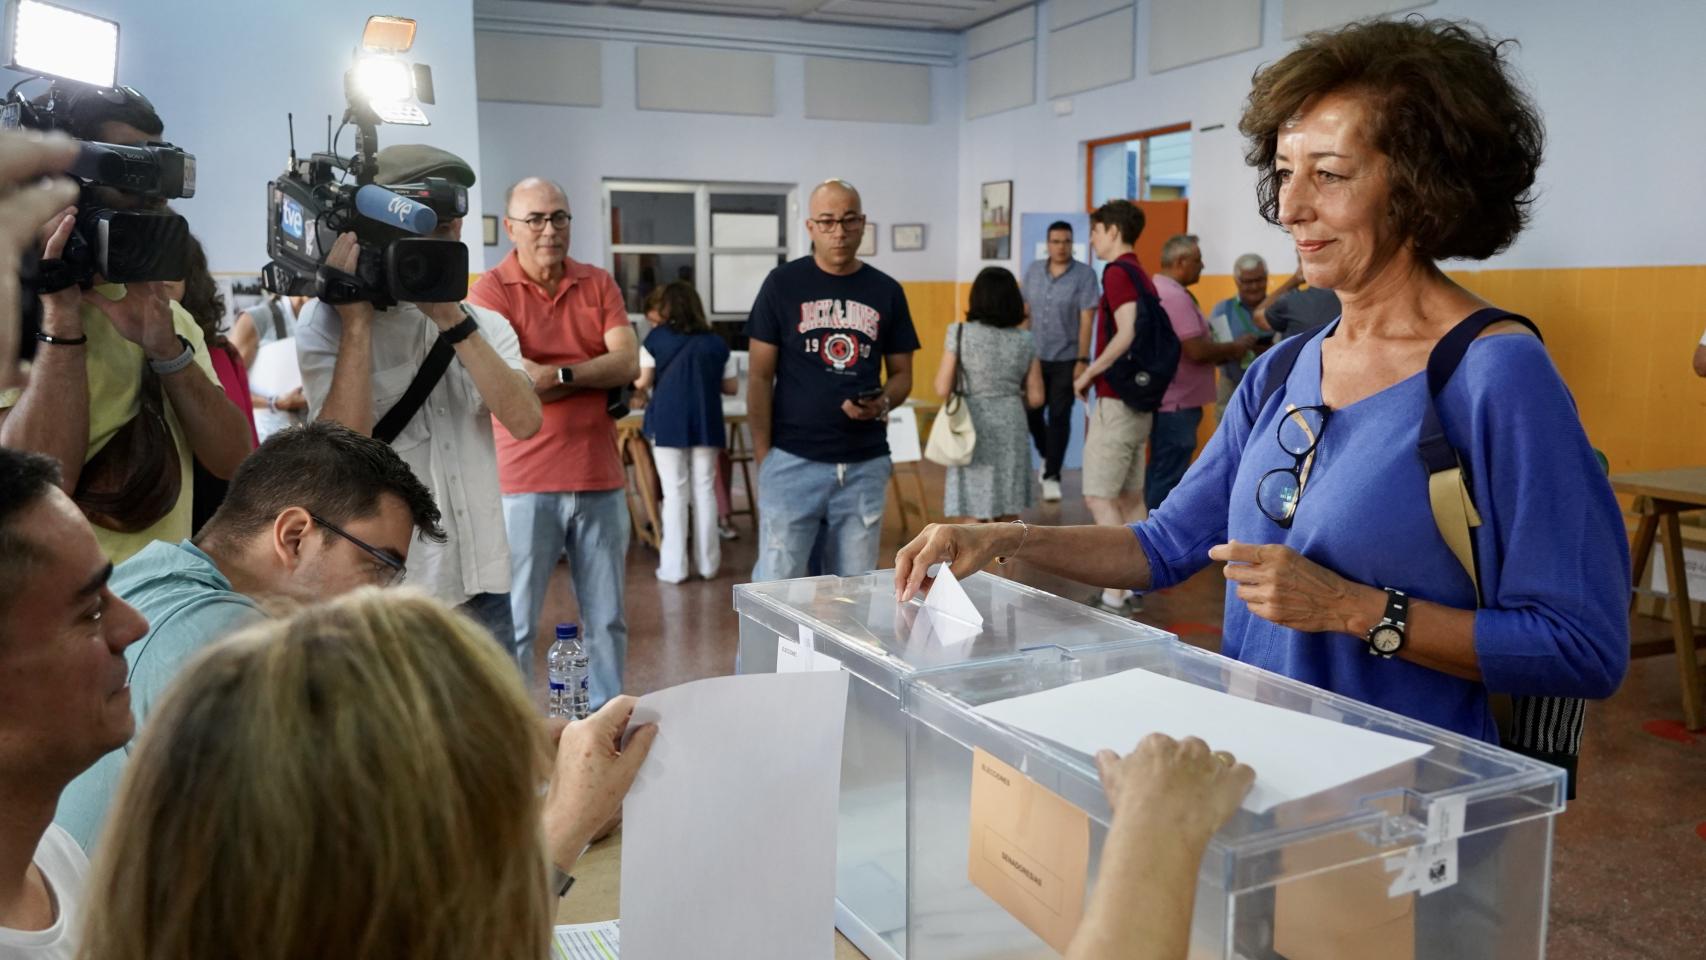 Mercedes Cantalapiedra votando